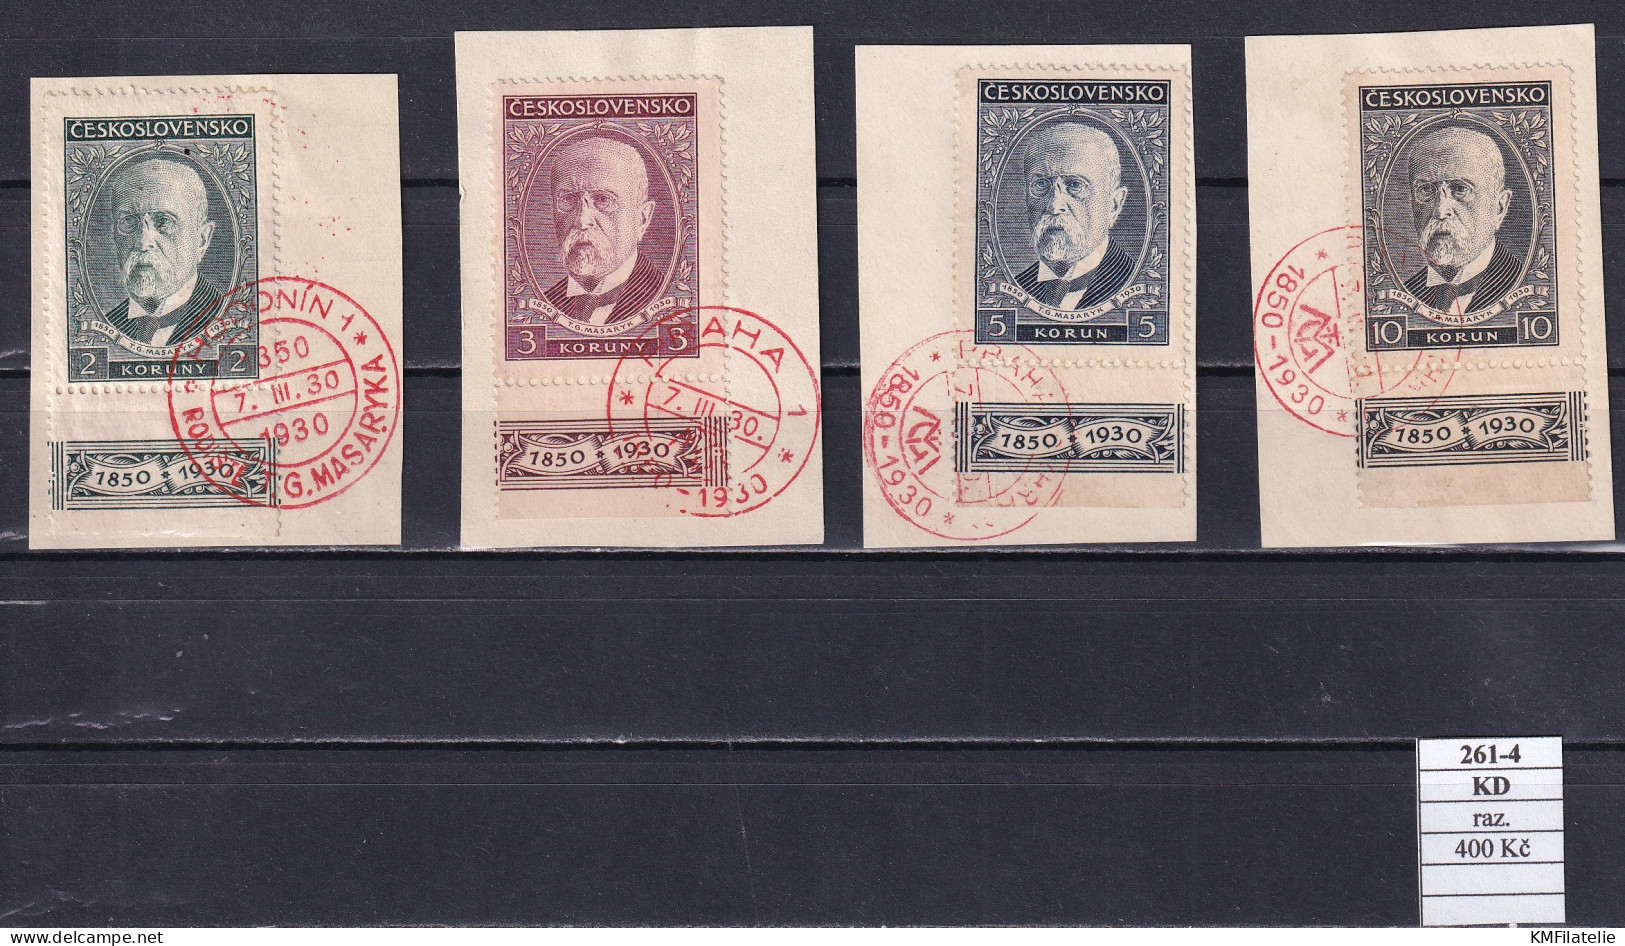 Czechoslovakia Pofis 261-4 KD Used - Used Stamps